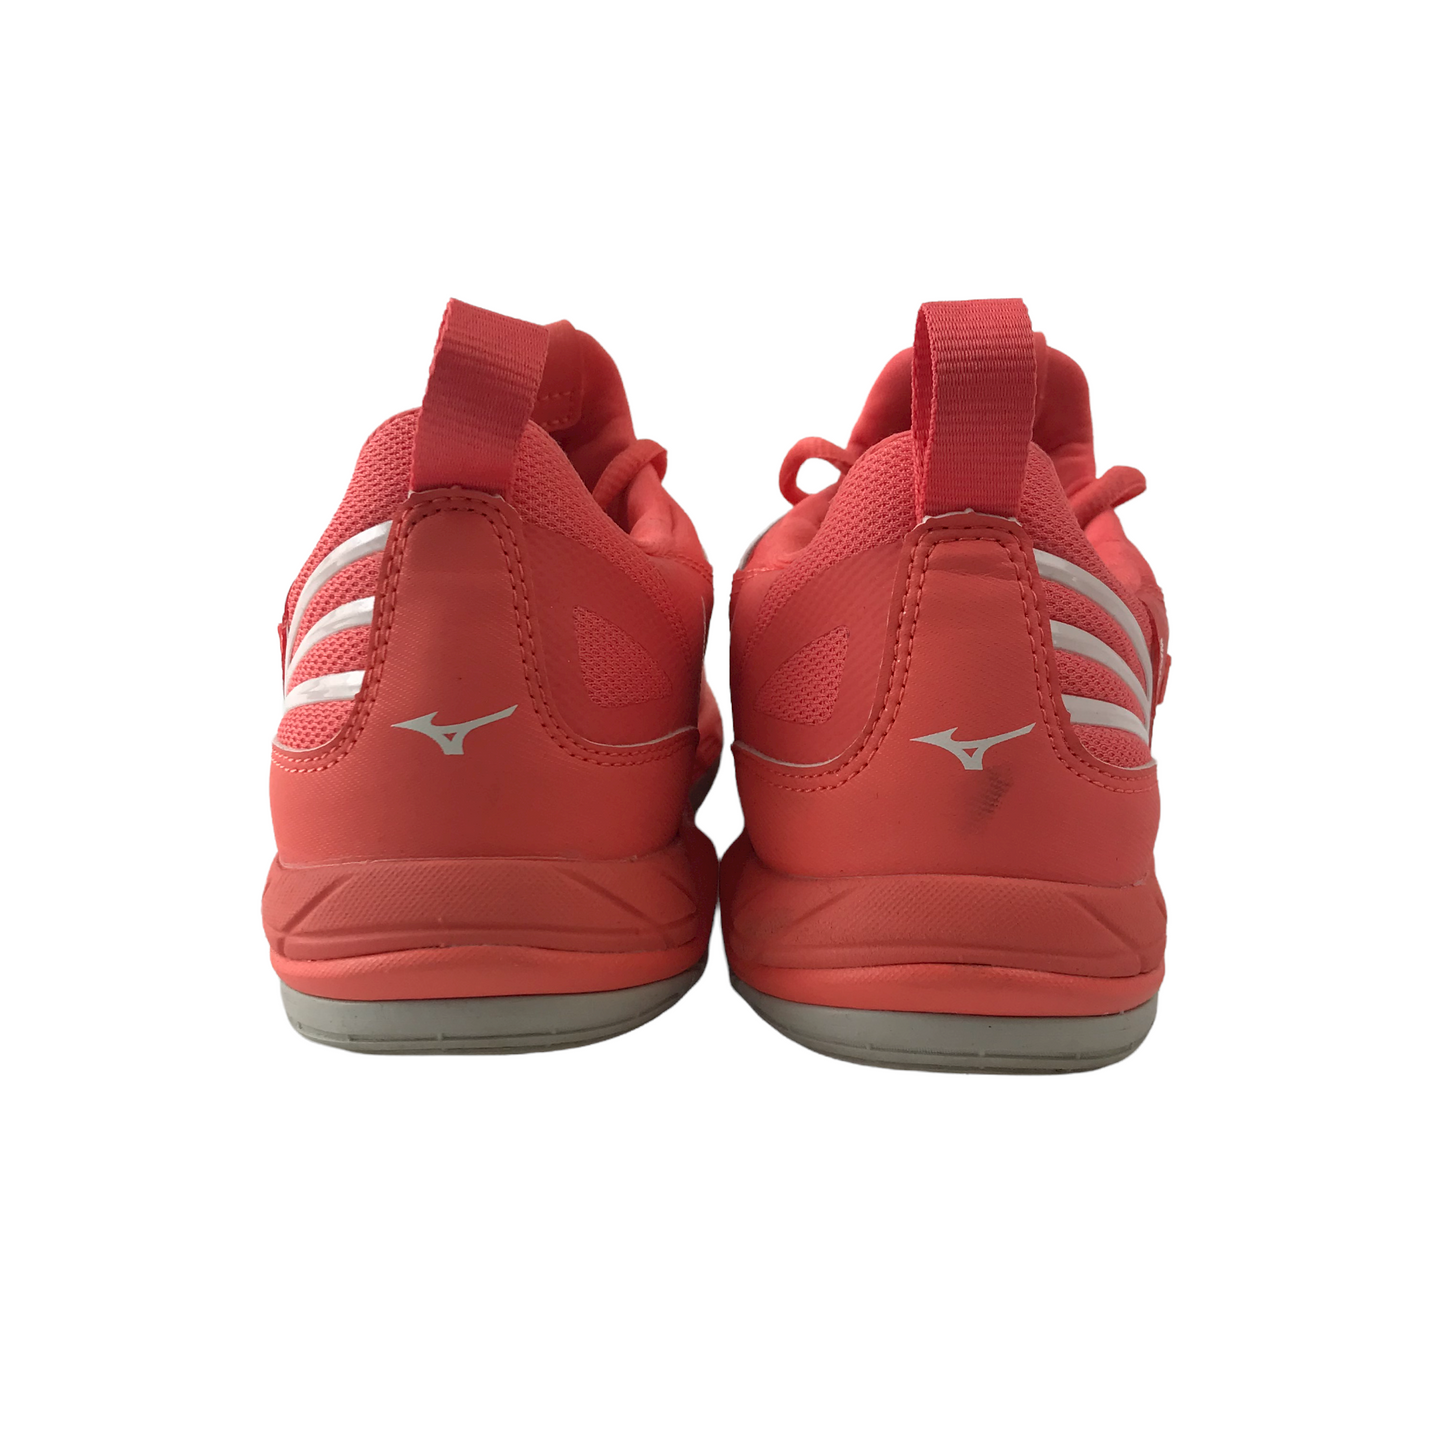 Mizuno Wave Luminous Orange Volleyball Trainers Shoe Size 6